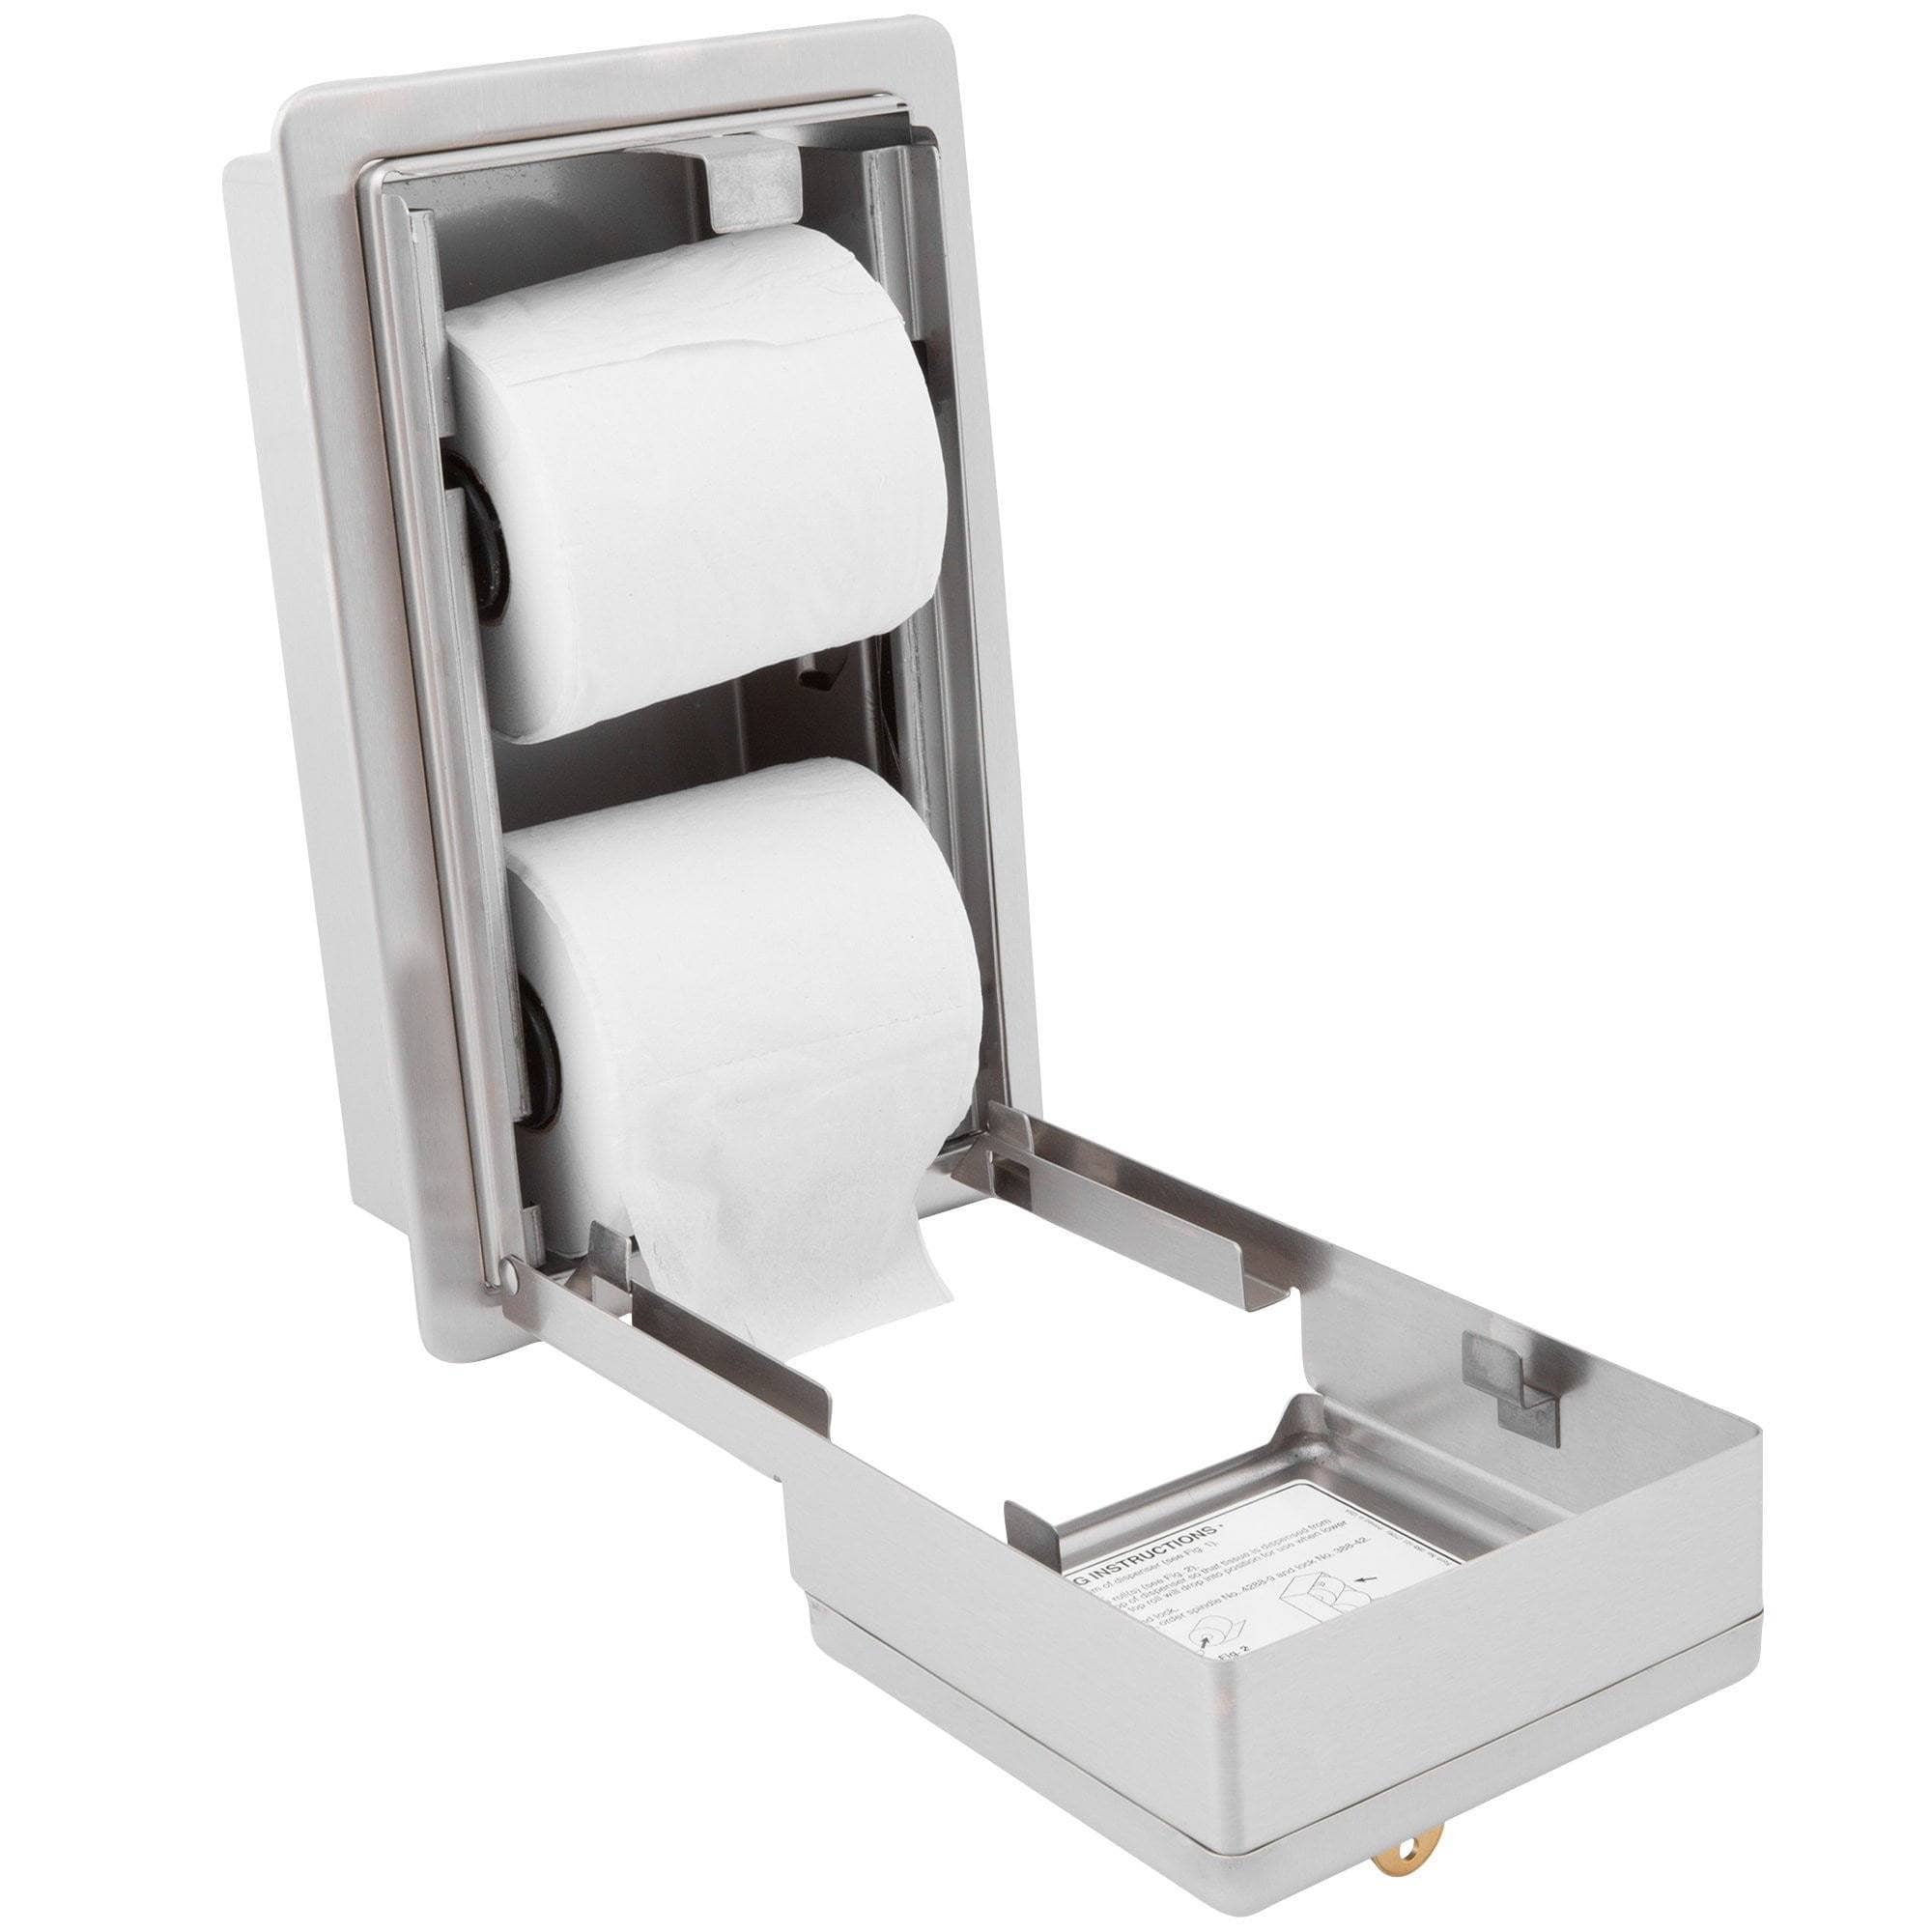 Bobrick B-3888 Commercial Toilet Paper Dispenser, Recessed-Mounted, Stainless Steel w/ Satin Finish - TotalRestroom.com